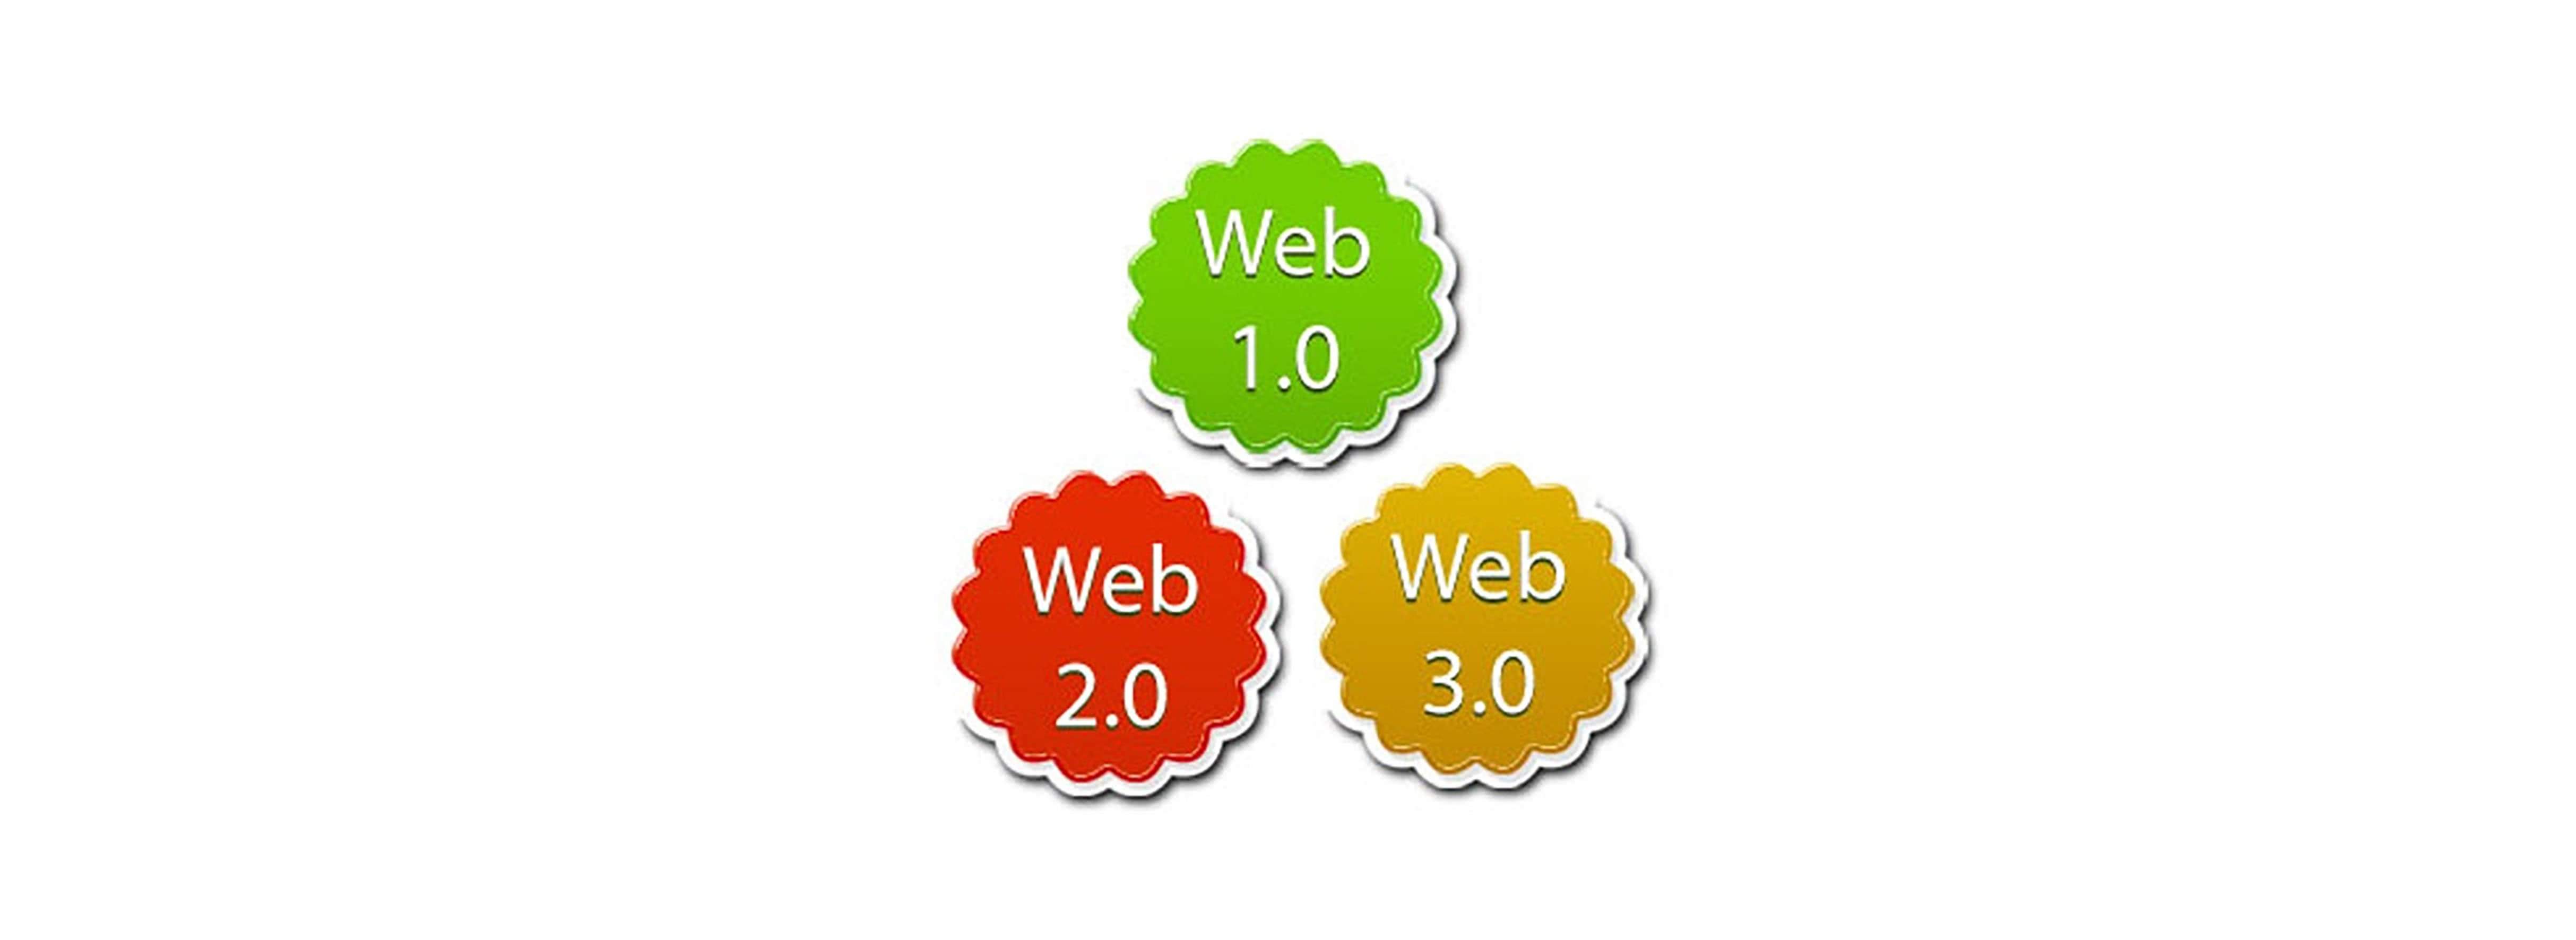 0 3.00. Технологии web 2.0. Технология web 3.0. Web 2 web 3. Web 1.0 web 2.0 web 3.0.